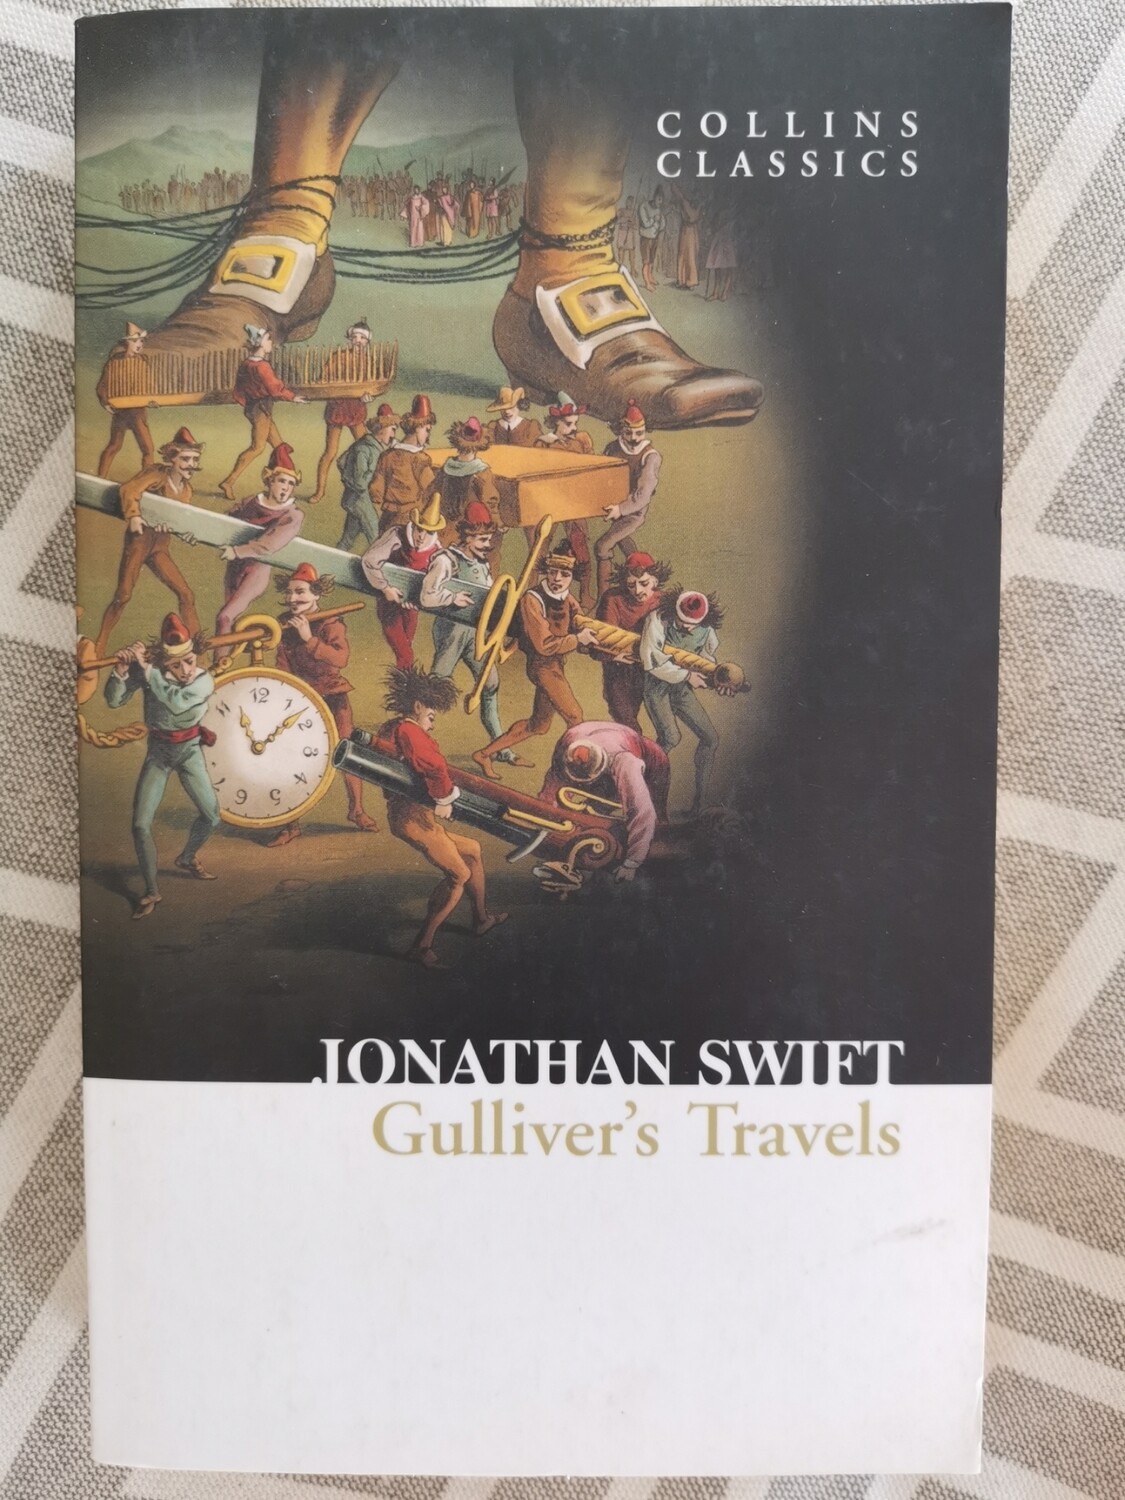 Gulliver travels, Jonathan Swift